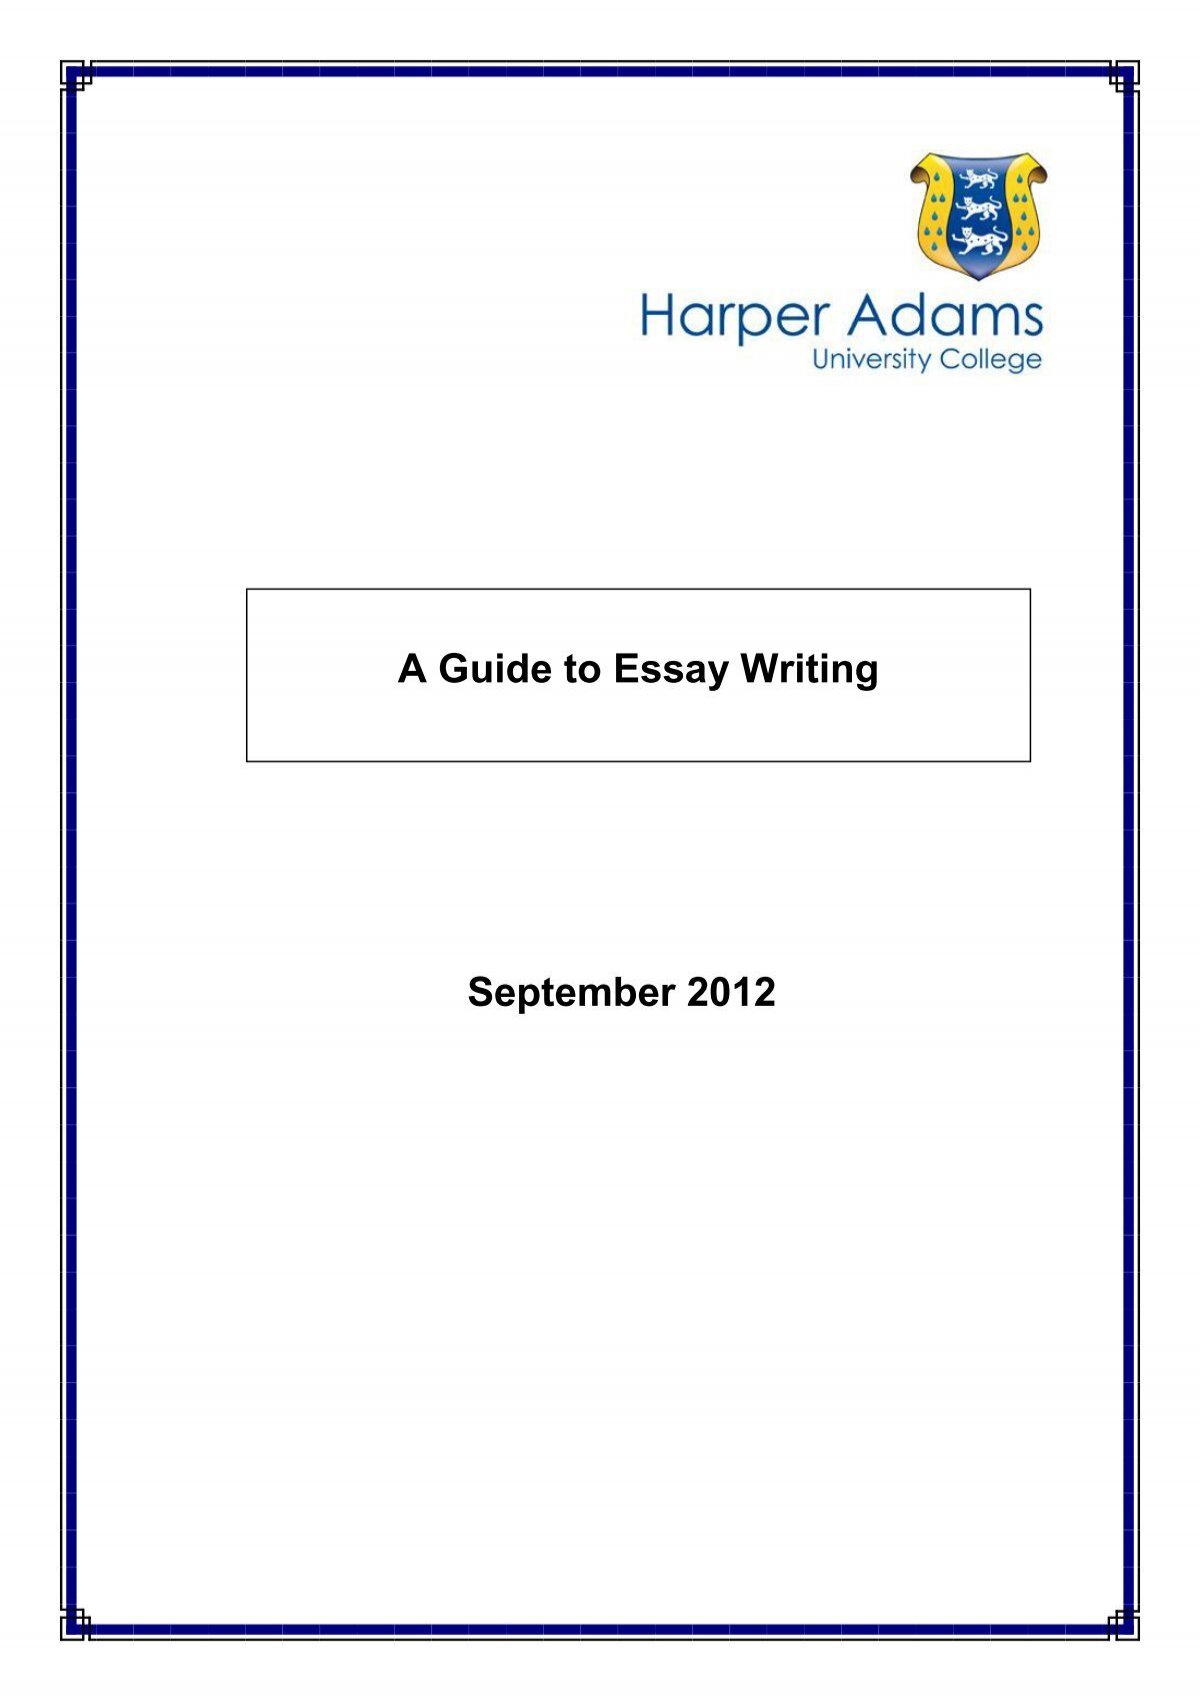 harper adams guide to essay writing